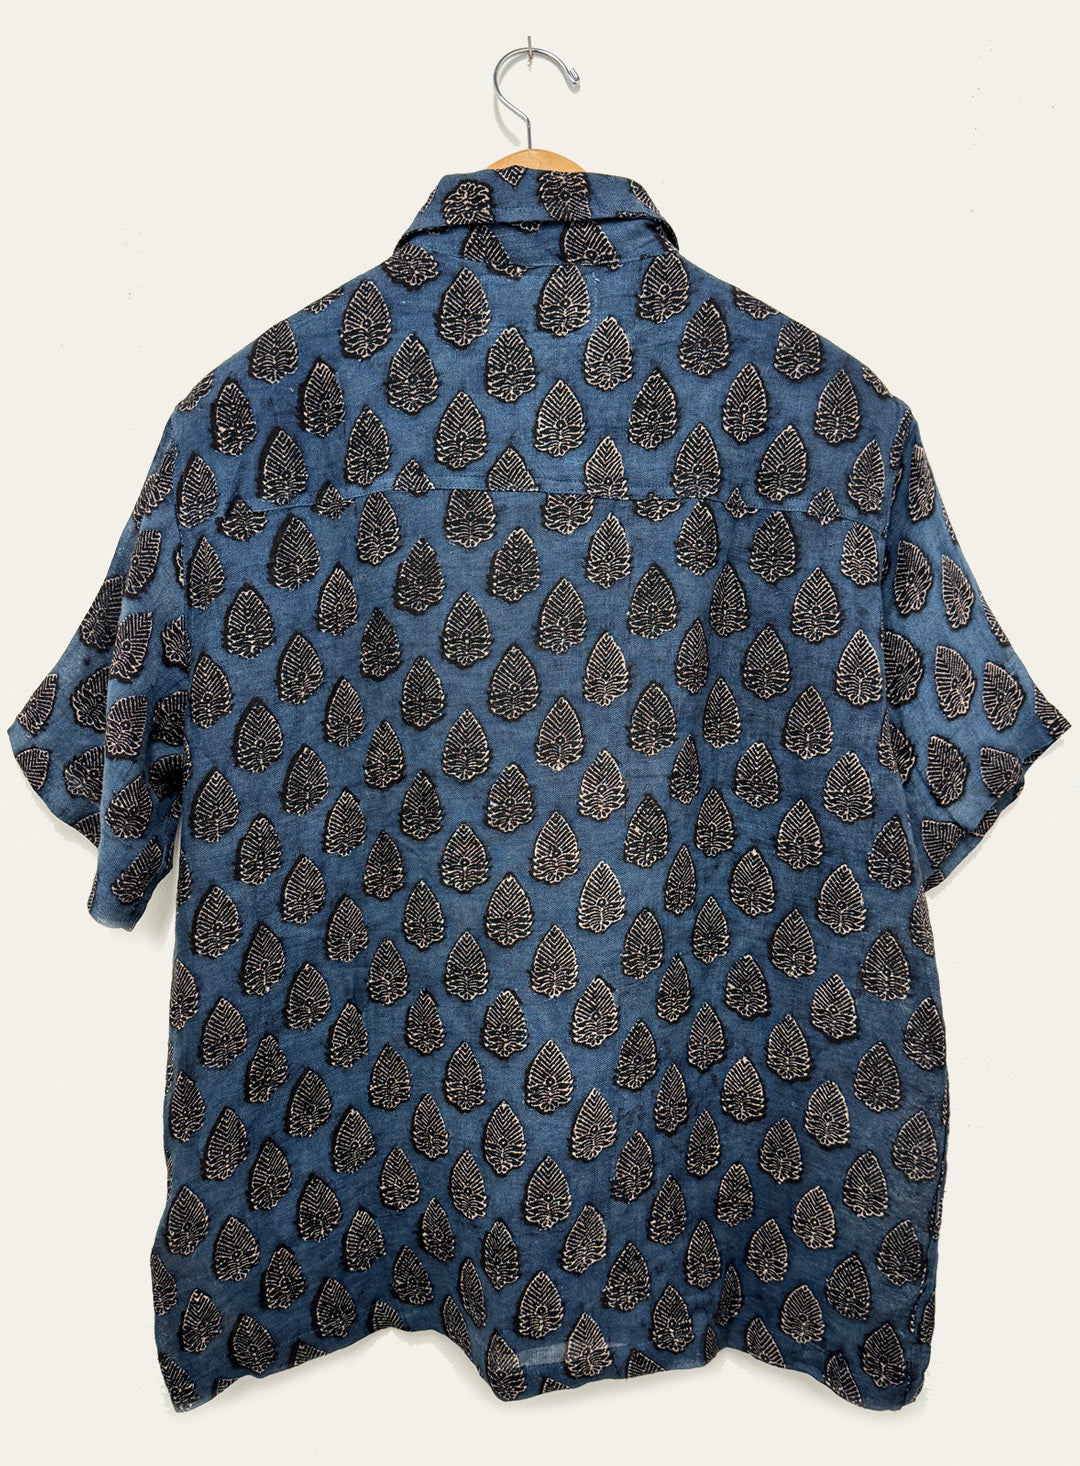 KARTIK RESEARCH Hand Block Printed Leaf Print Short Sleeve Shirt LEO B…